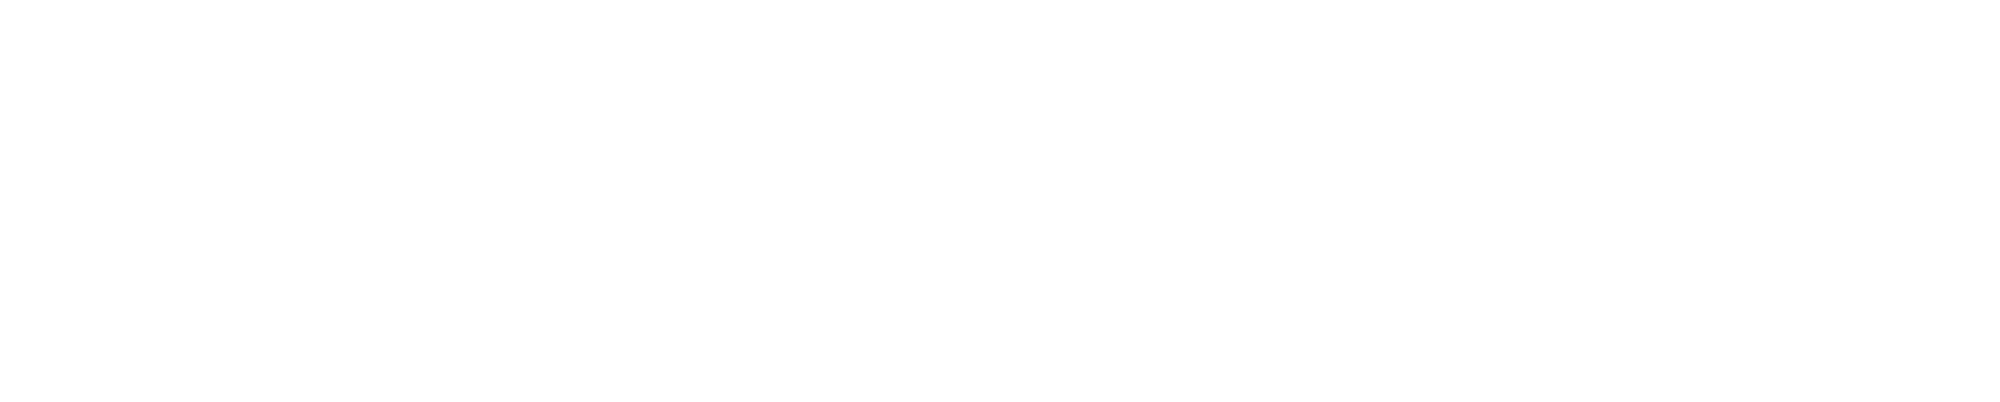 zac-speed-dakar-logo-white